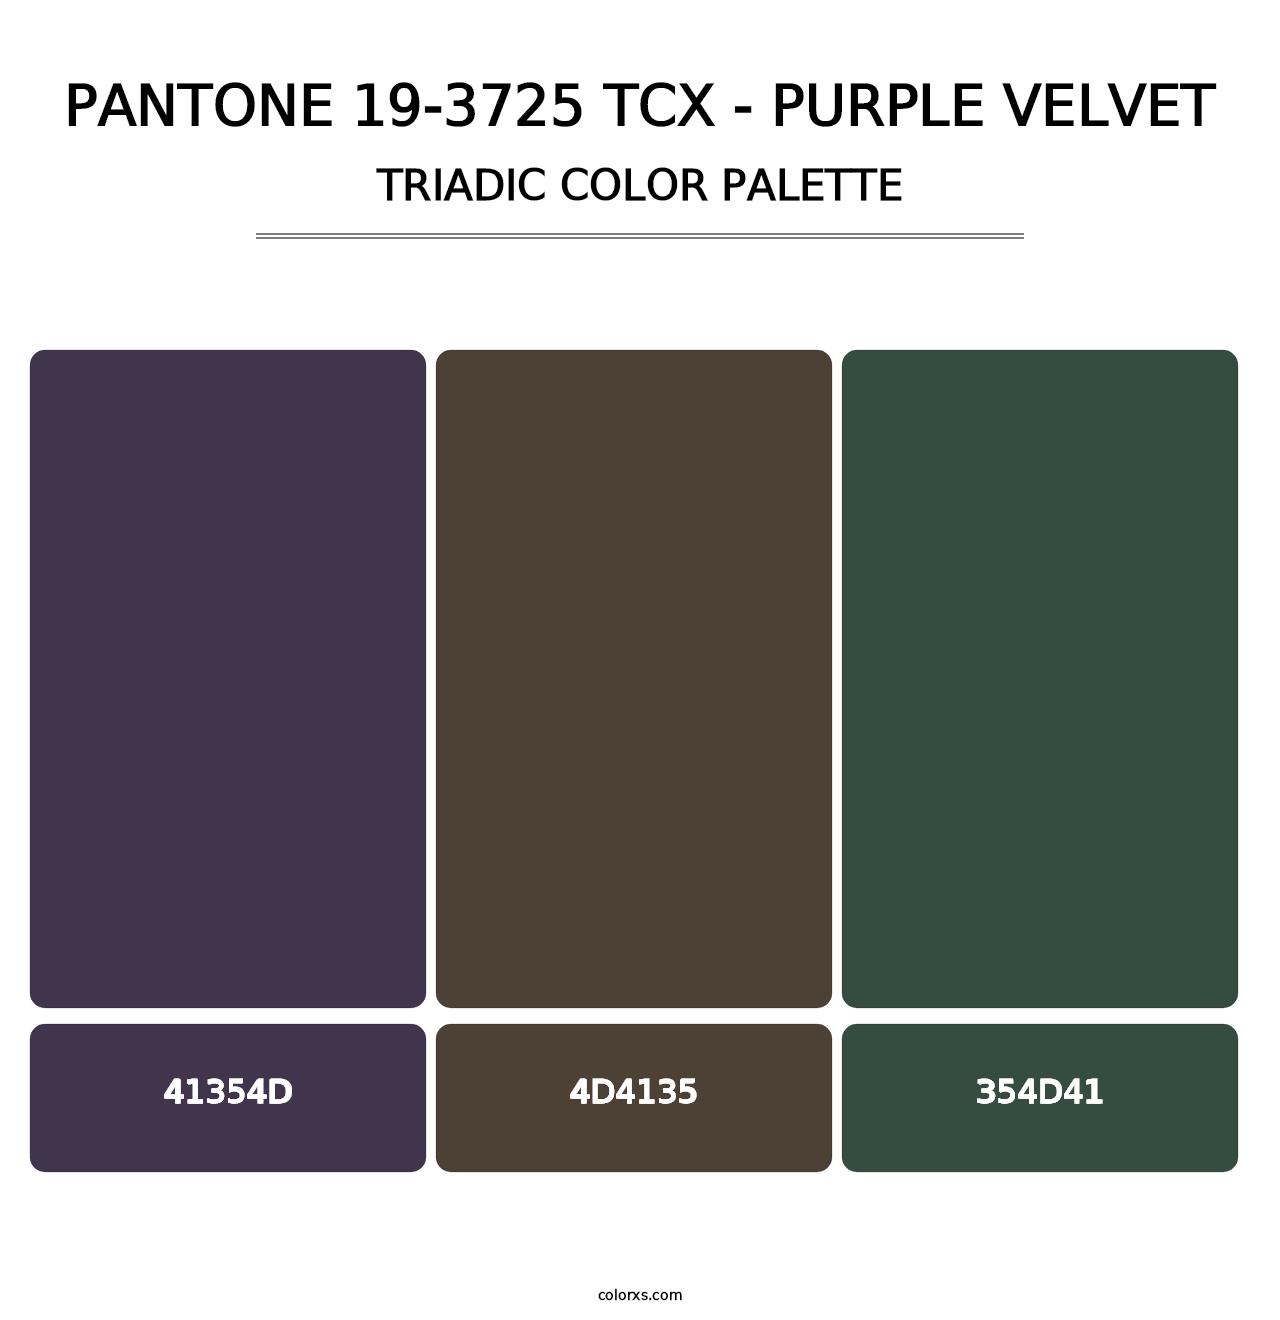 PANTONE 19-3725 TCX - Purple Velvet - Triadic Color Palette